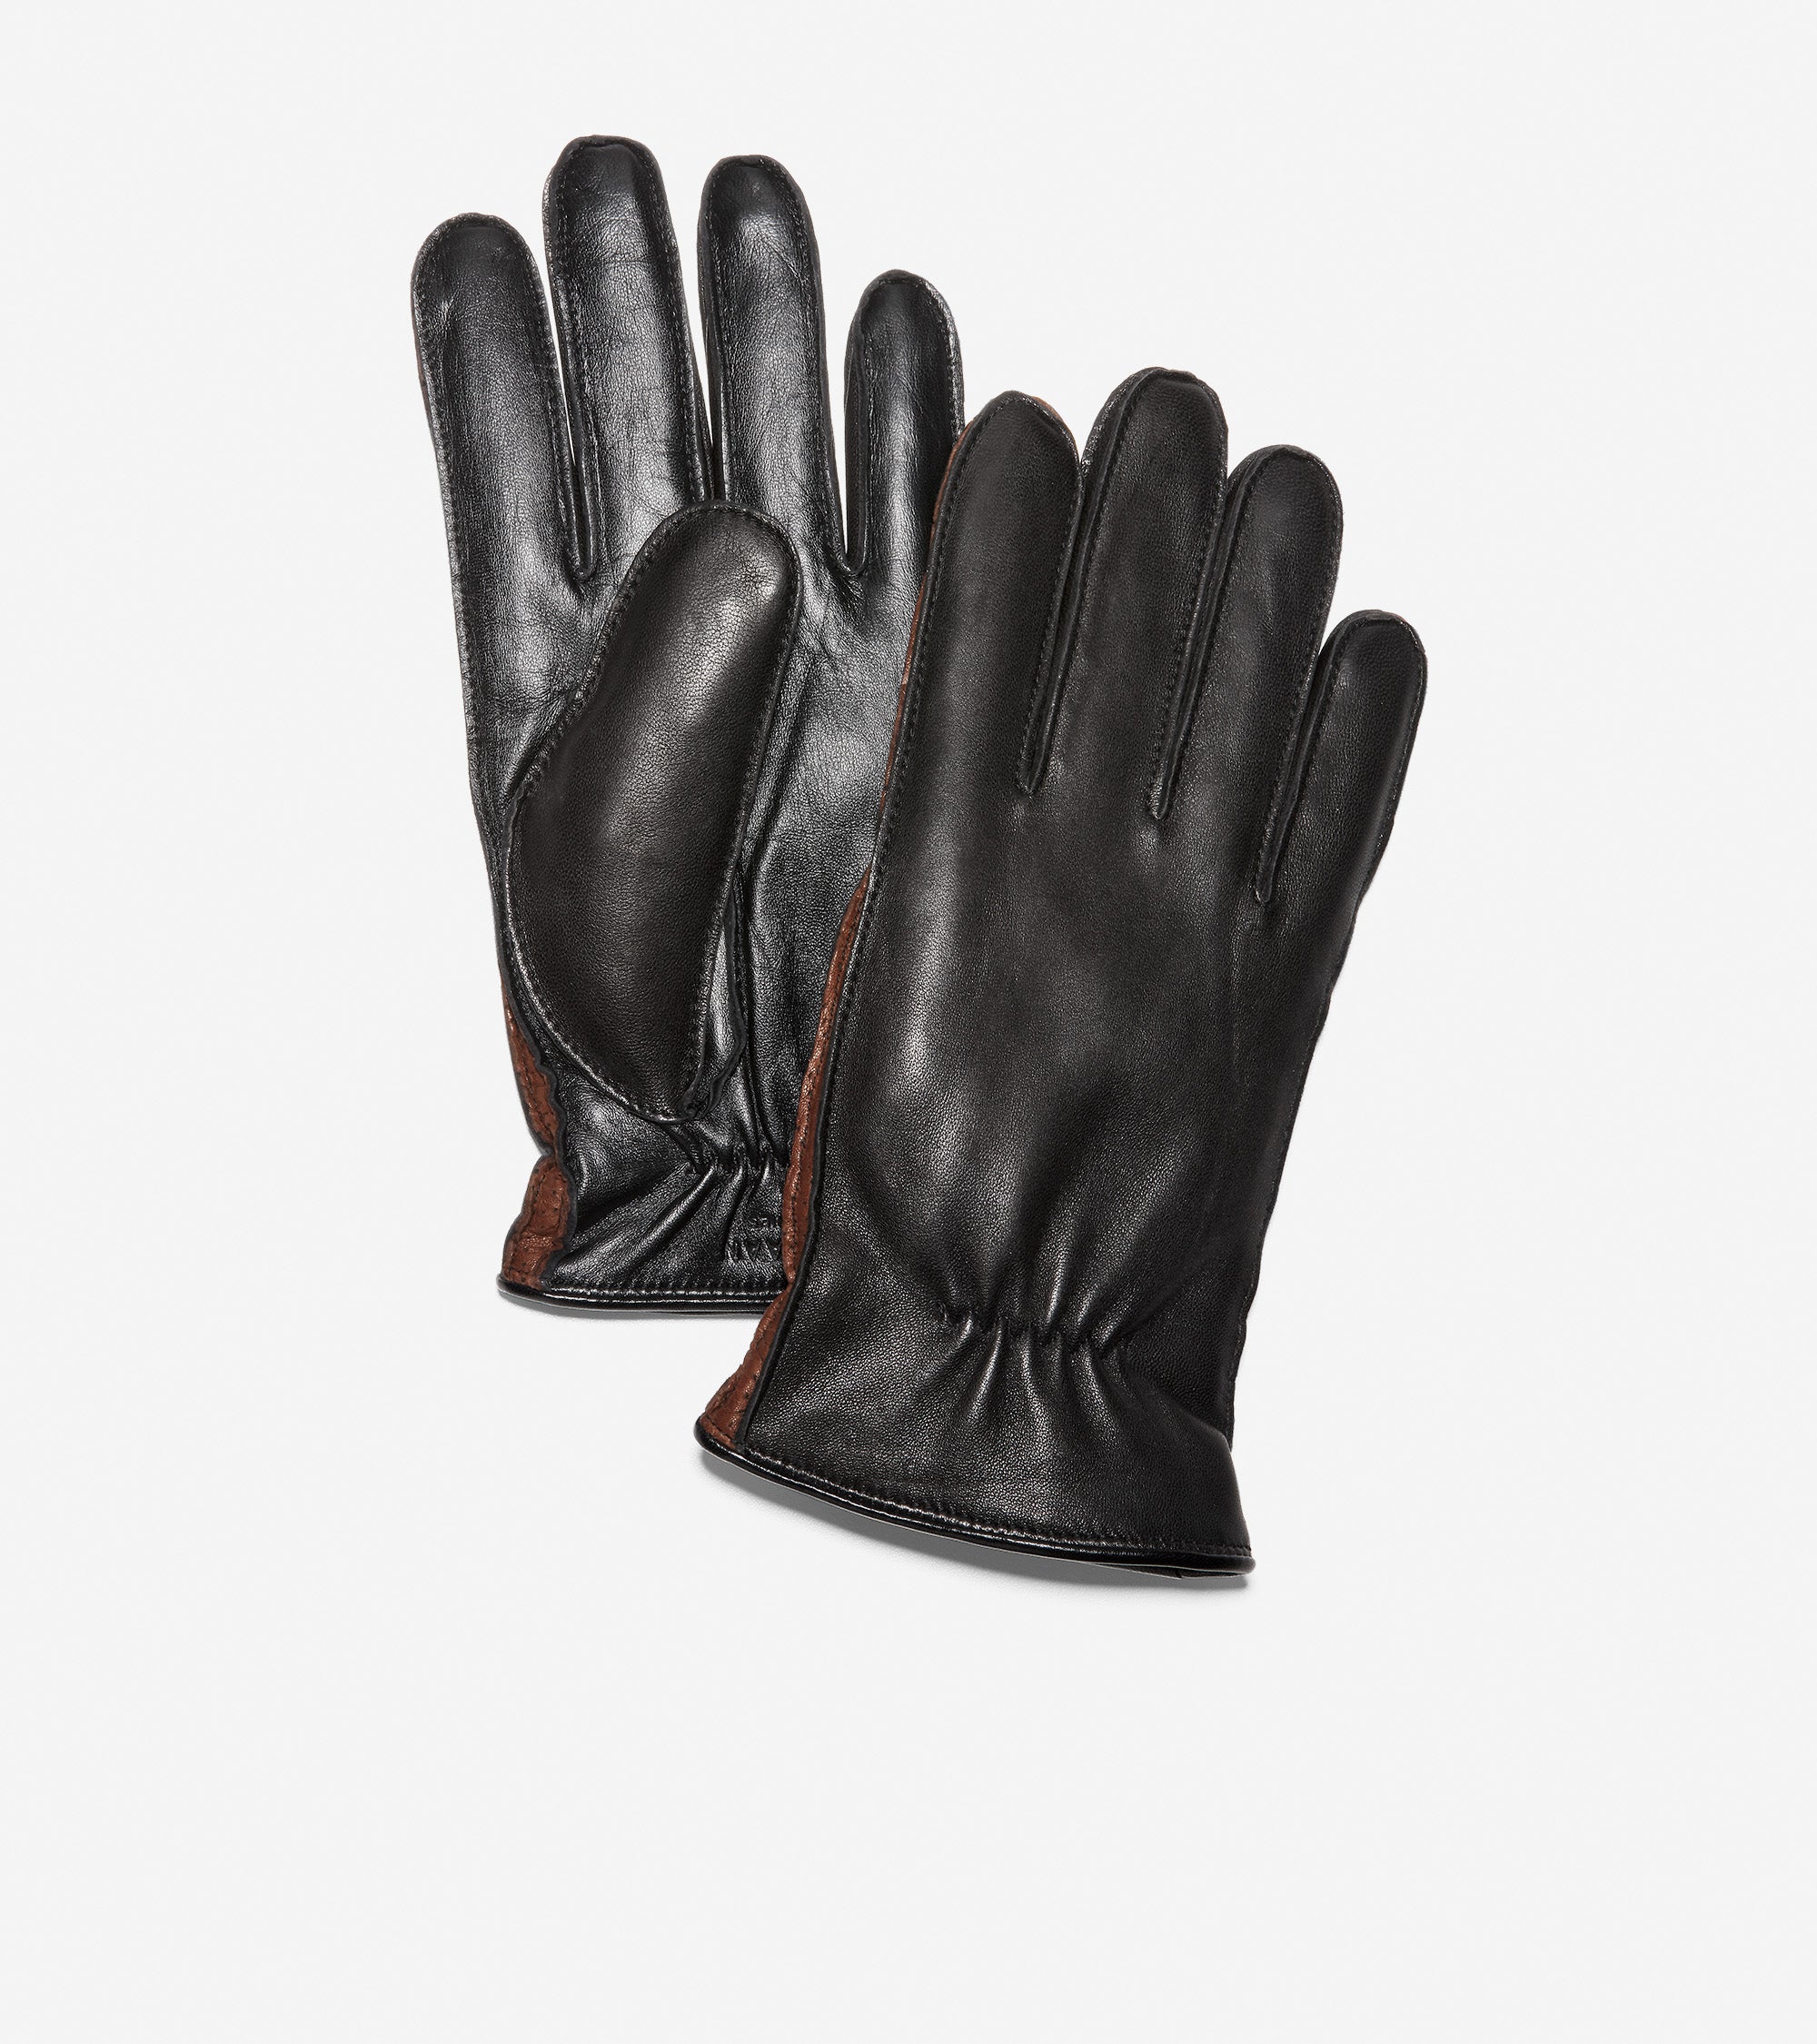 Cole Haan Gloves Black/British Tan